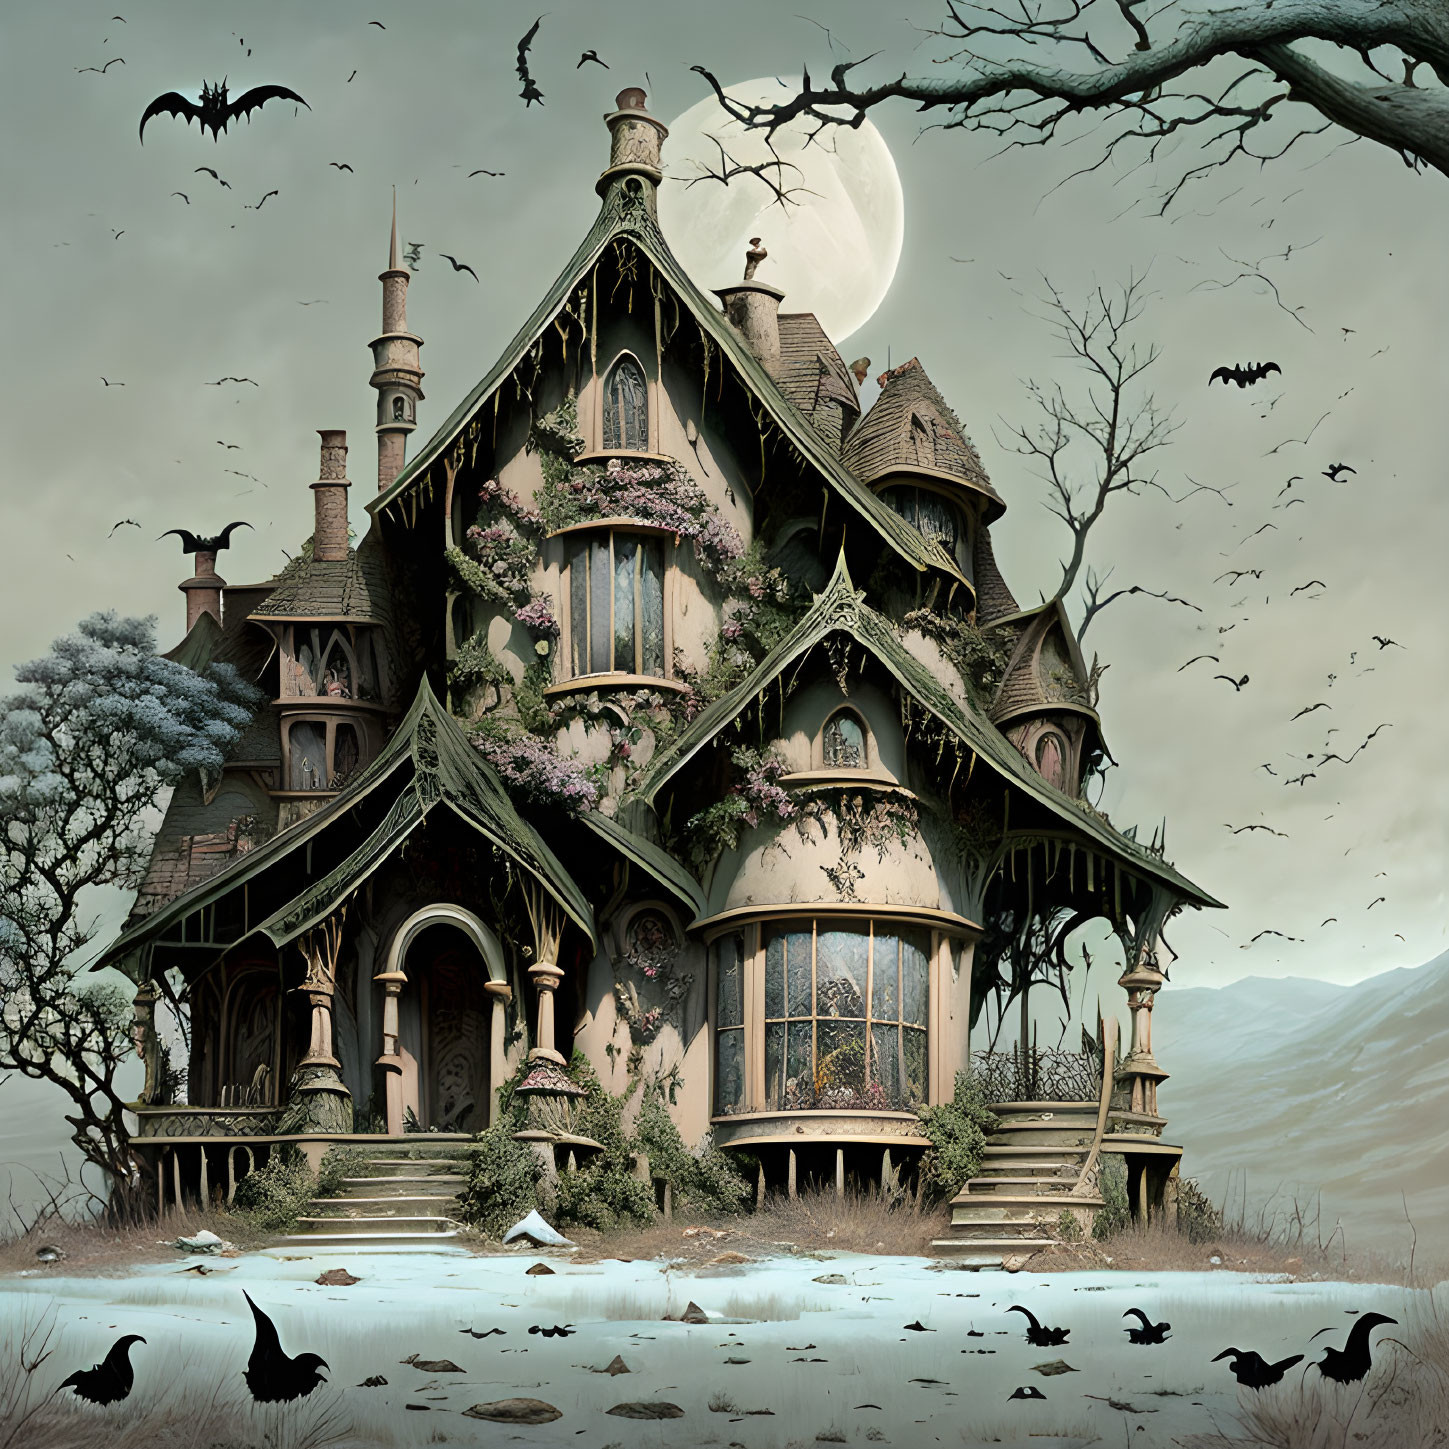 Spooky Place